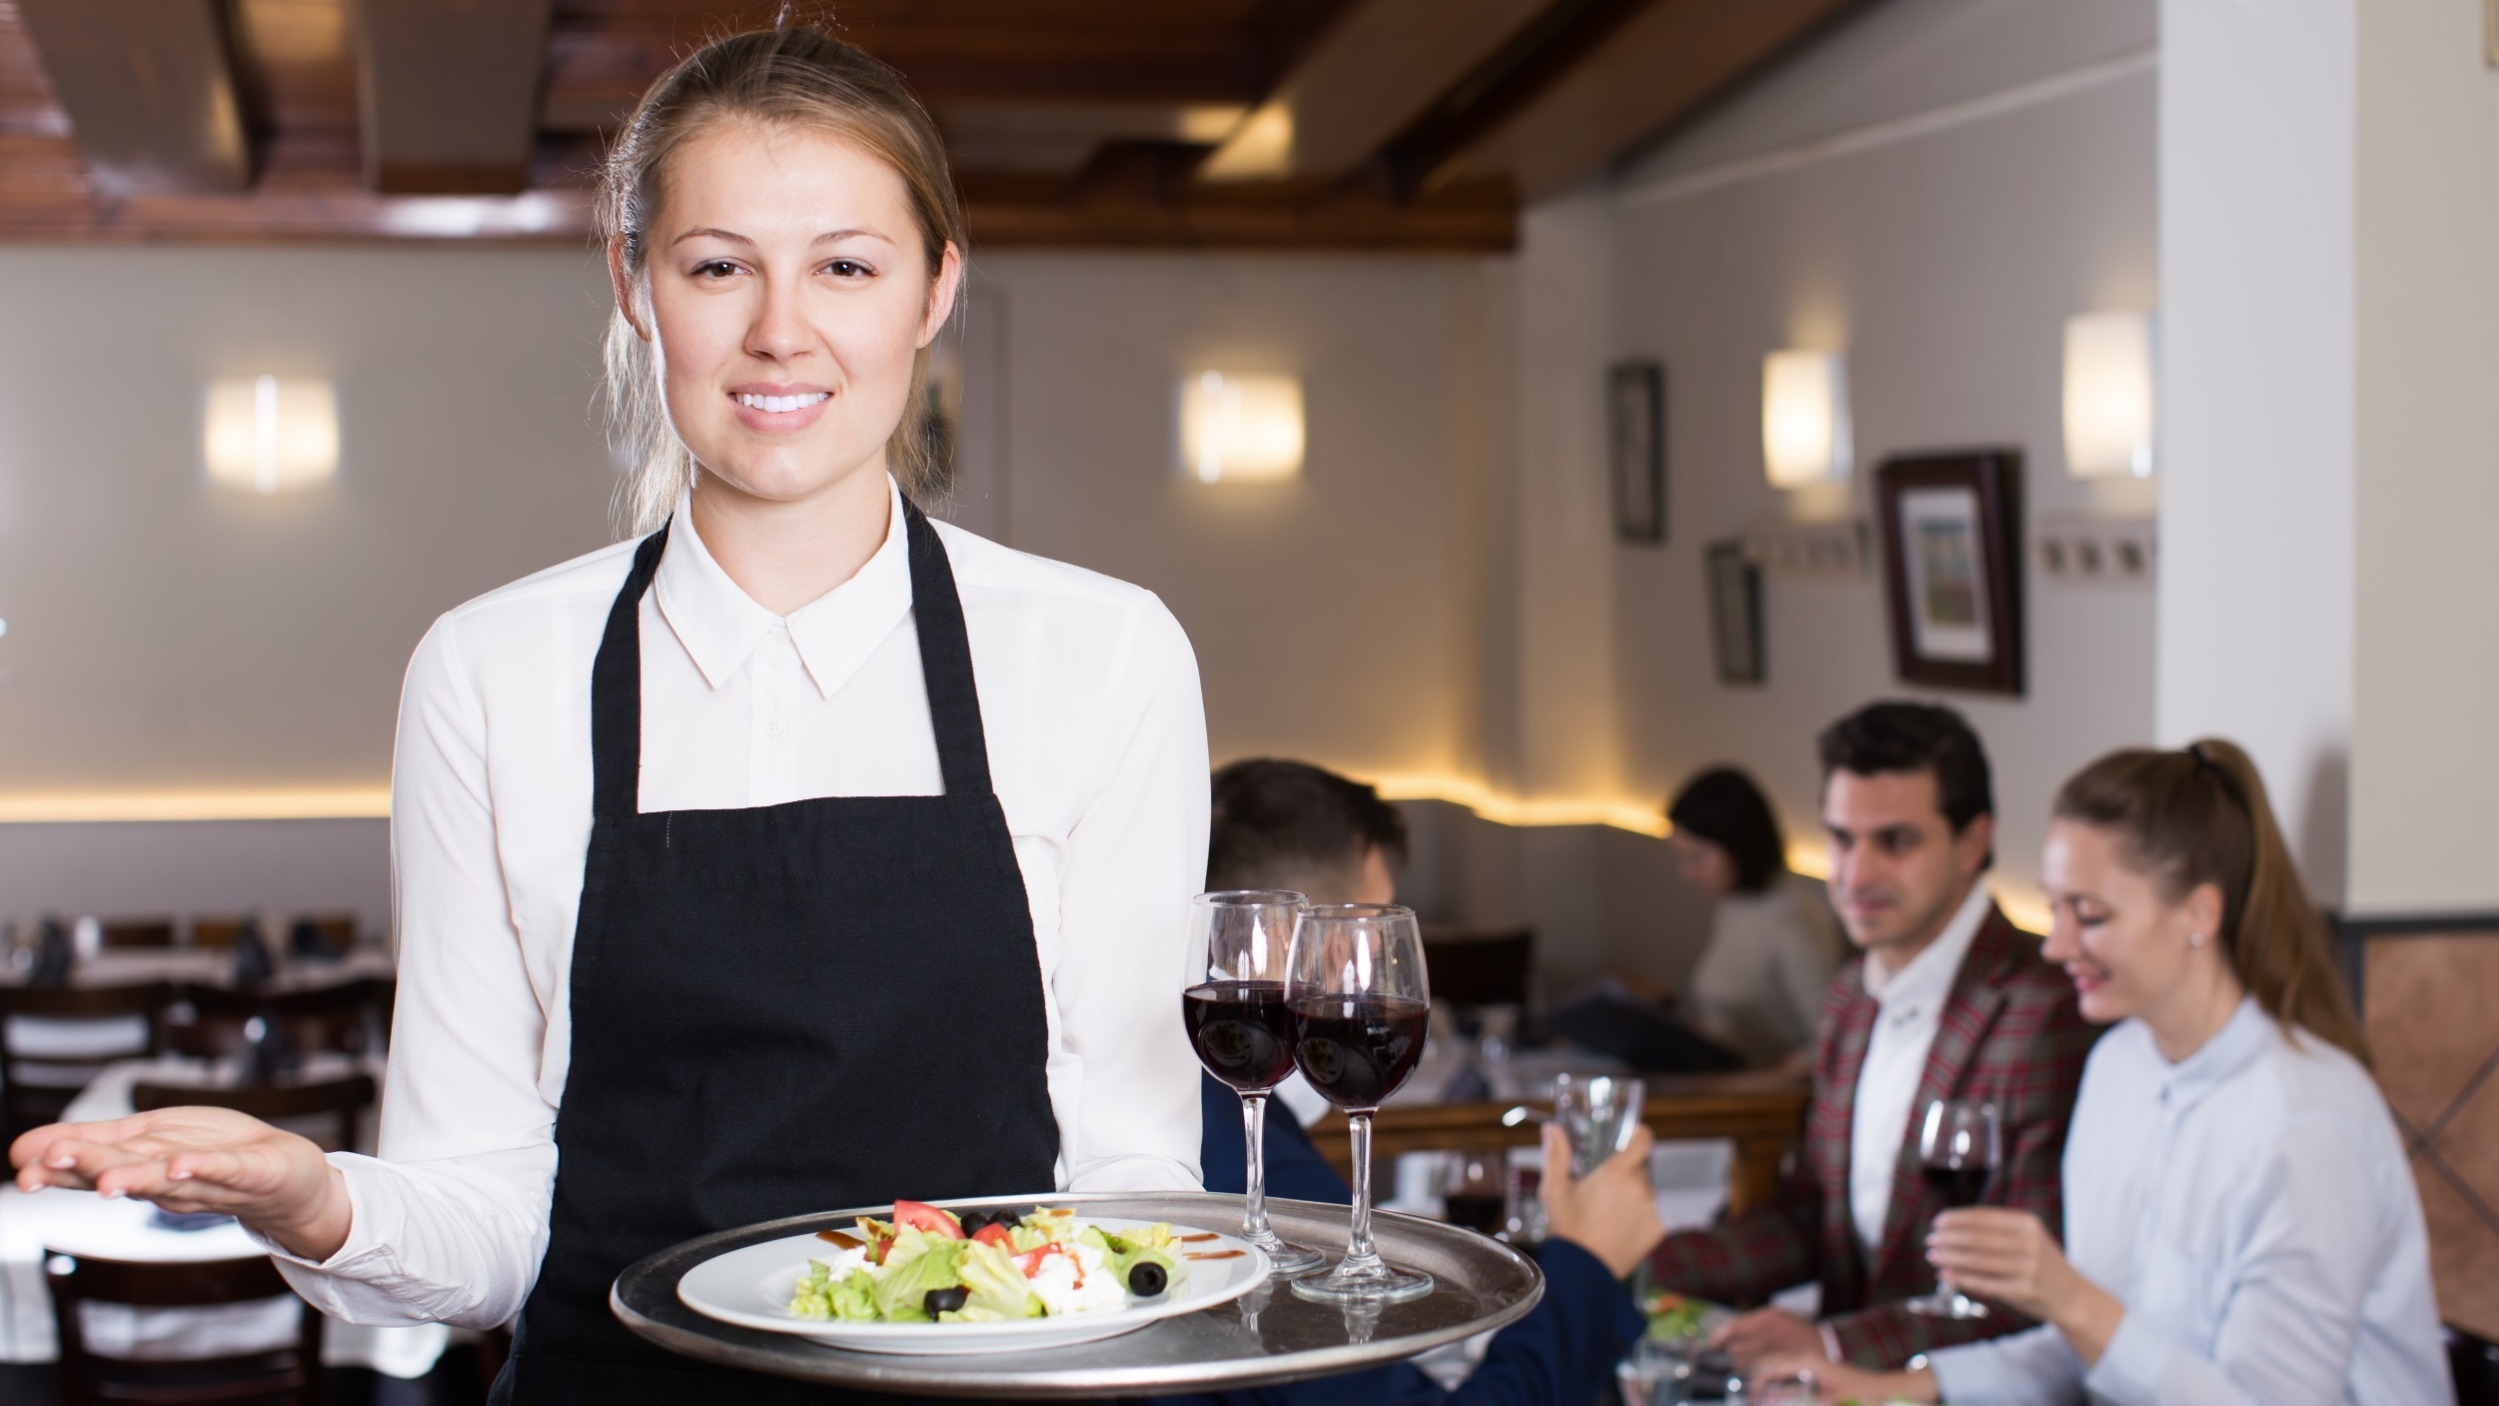 Restaurant Workers Compensation Insurance